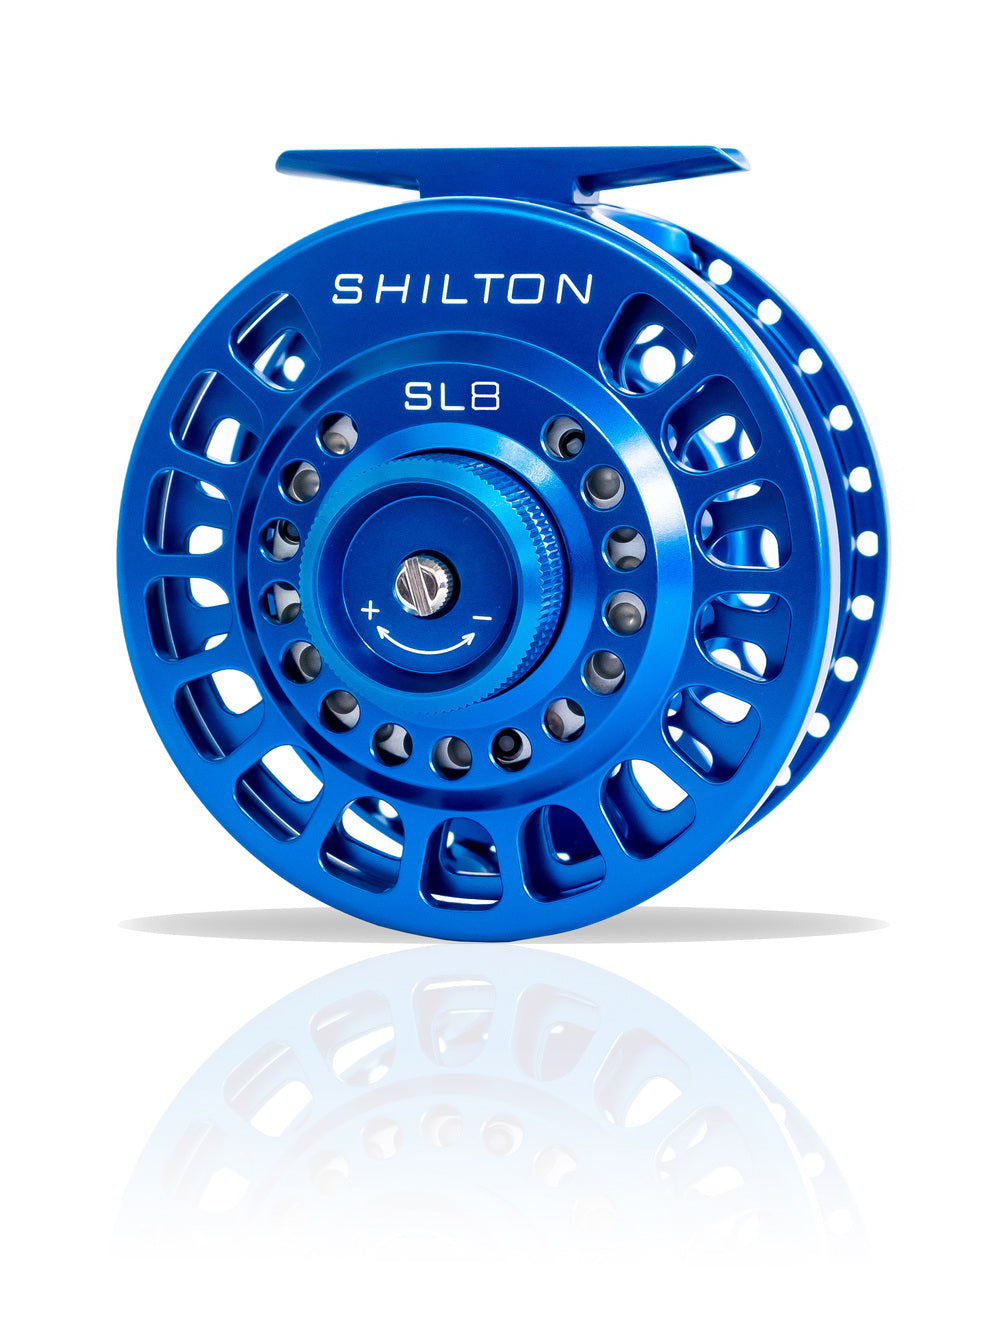 Shilton SL5 Reels (7-8wt) SL8 in Blue